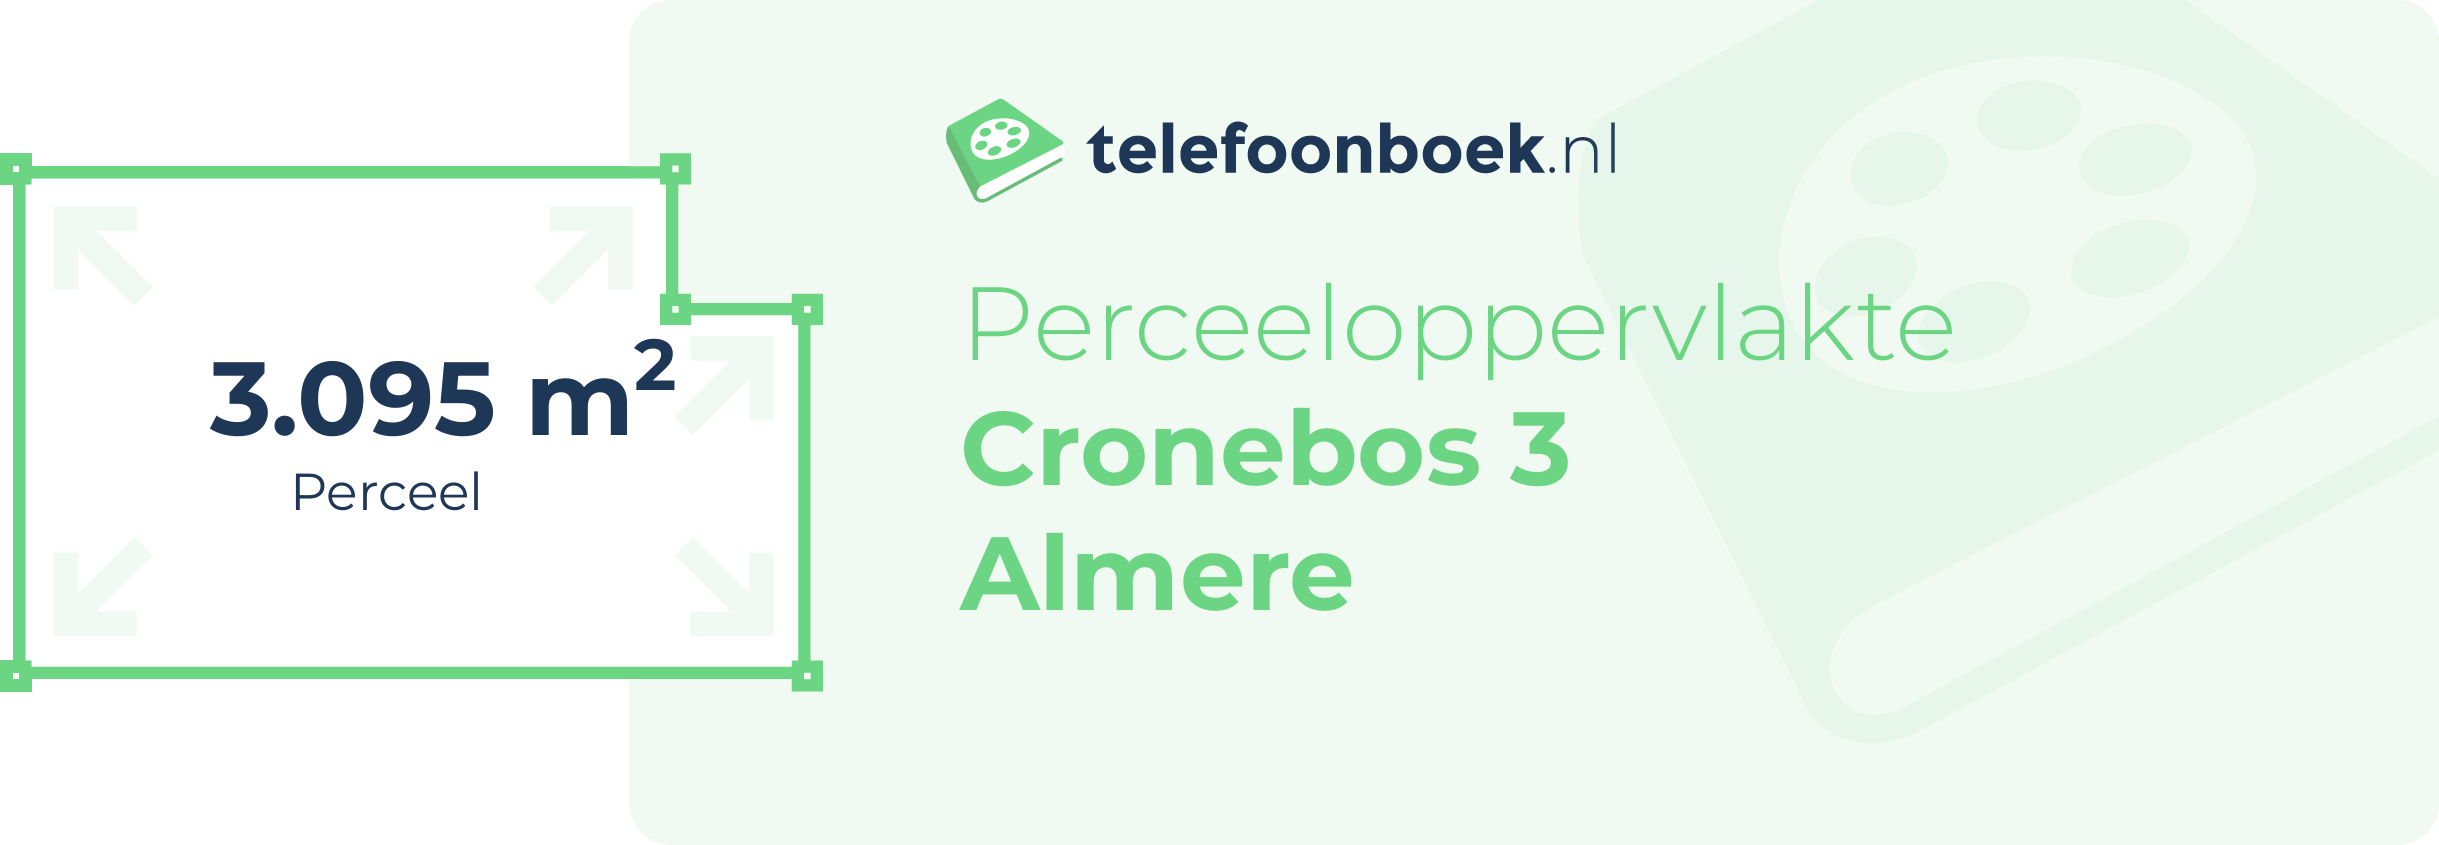 Perceeloppervlakte Cronebos 3 Almere